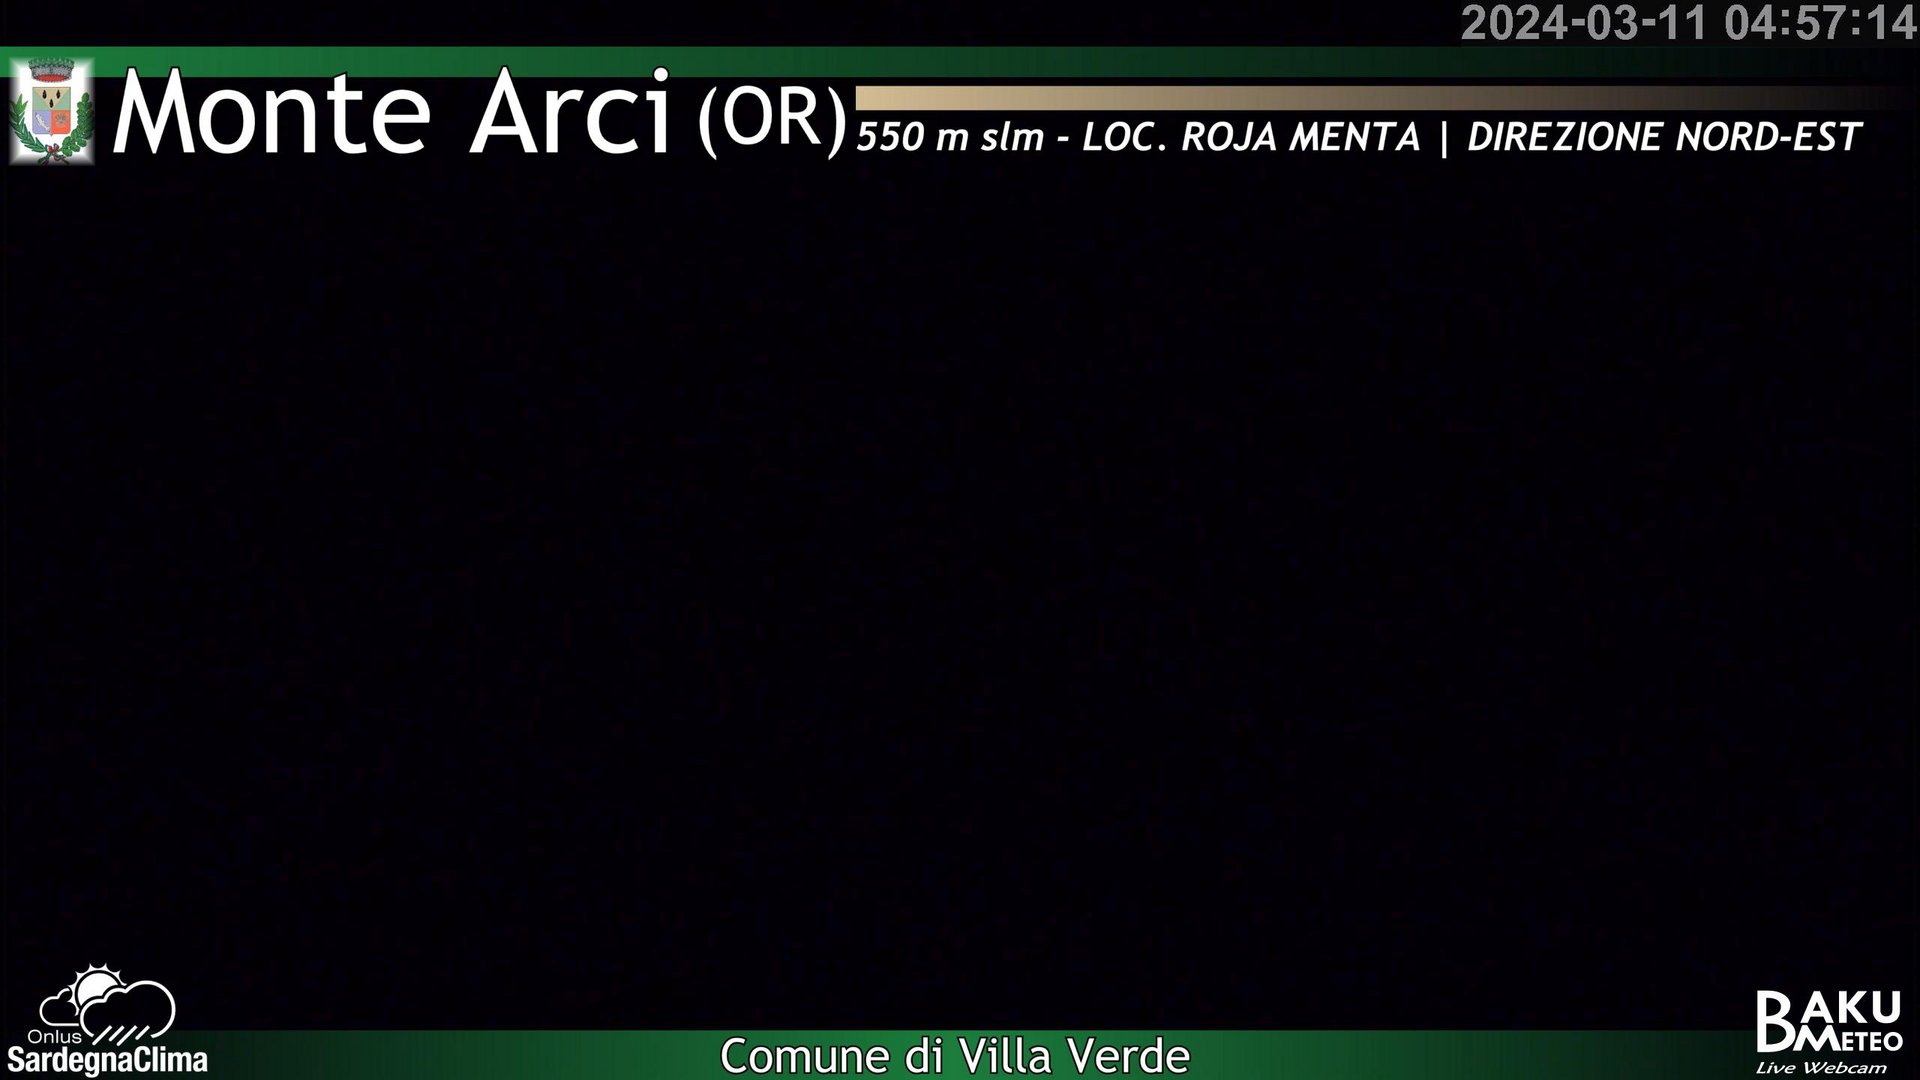 time-lapse frame, Roja Menta Nord webcam